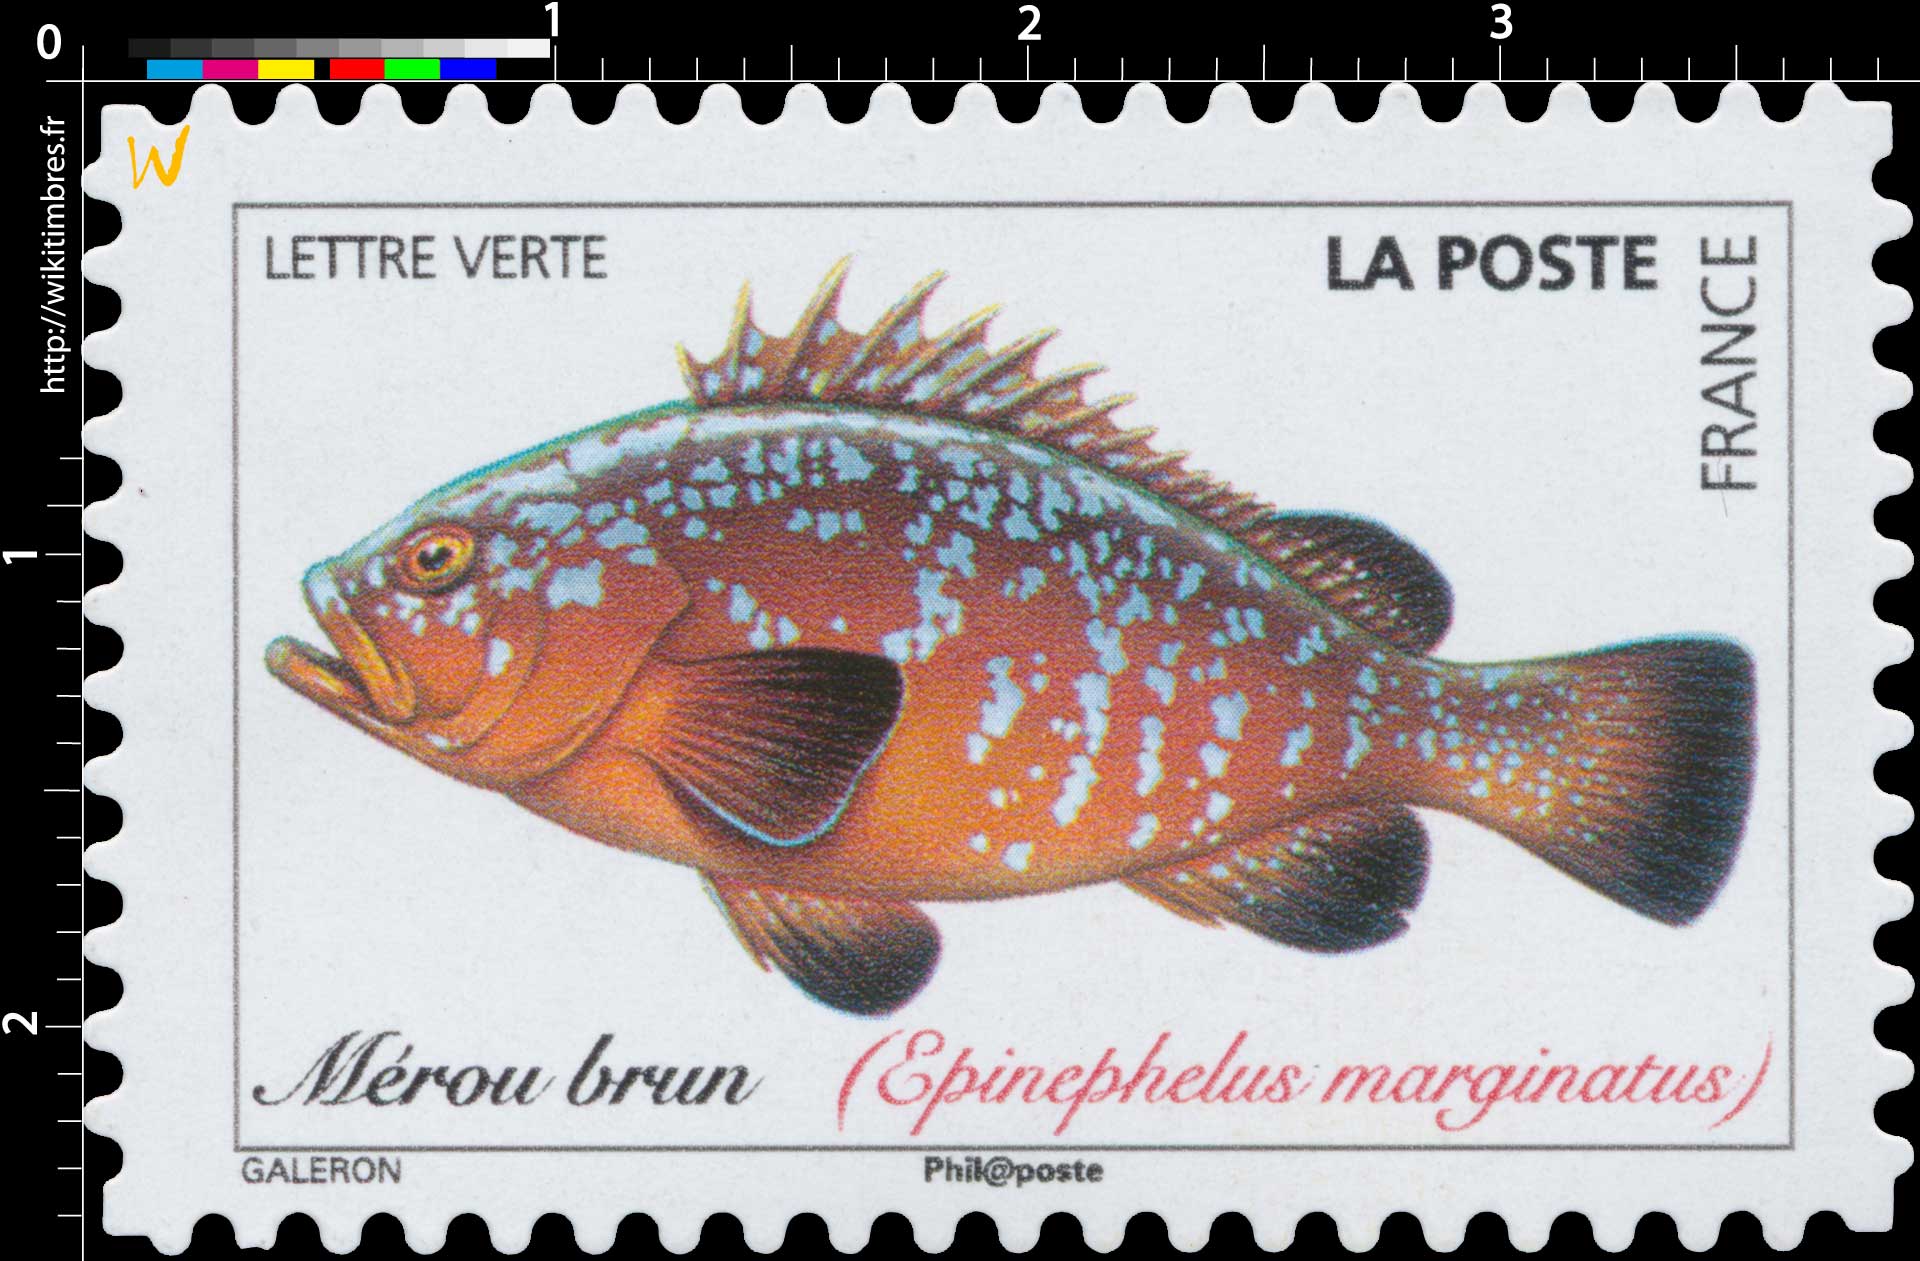 2019 Mérou brun (Epinephelus marginatus)